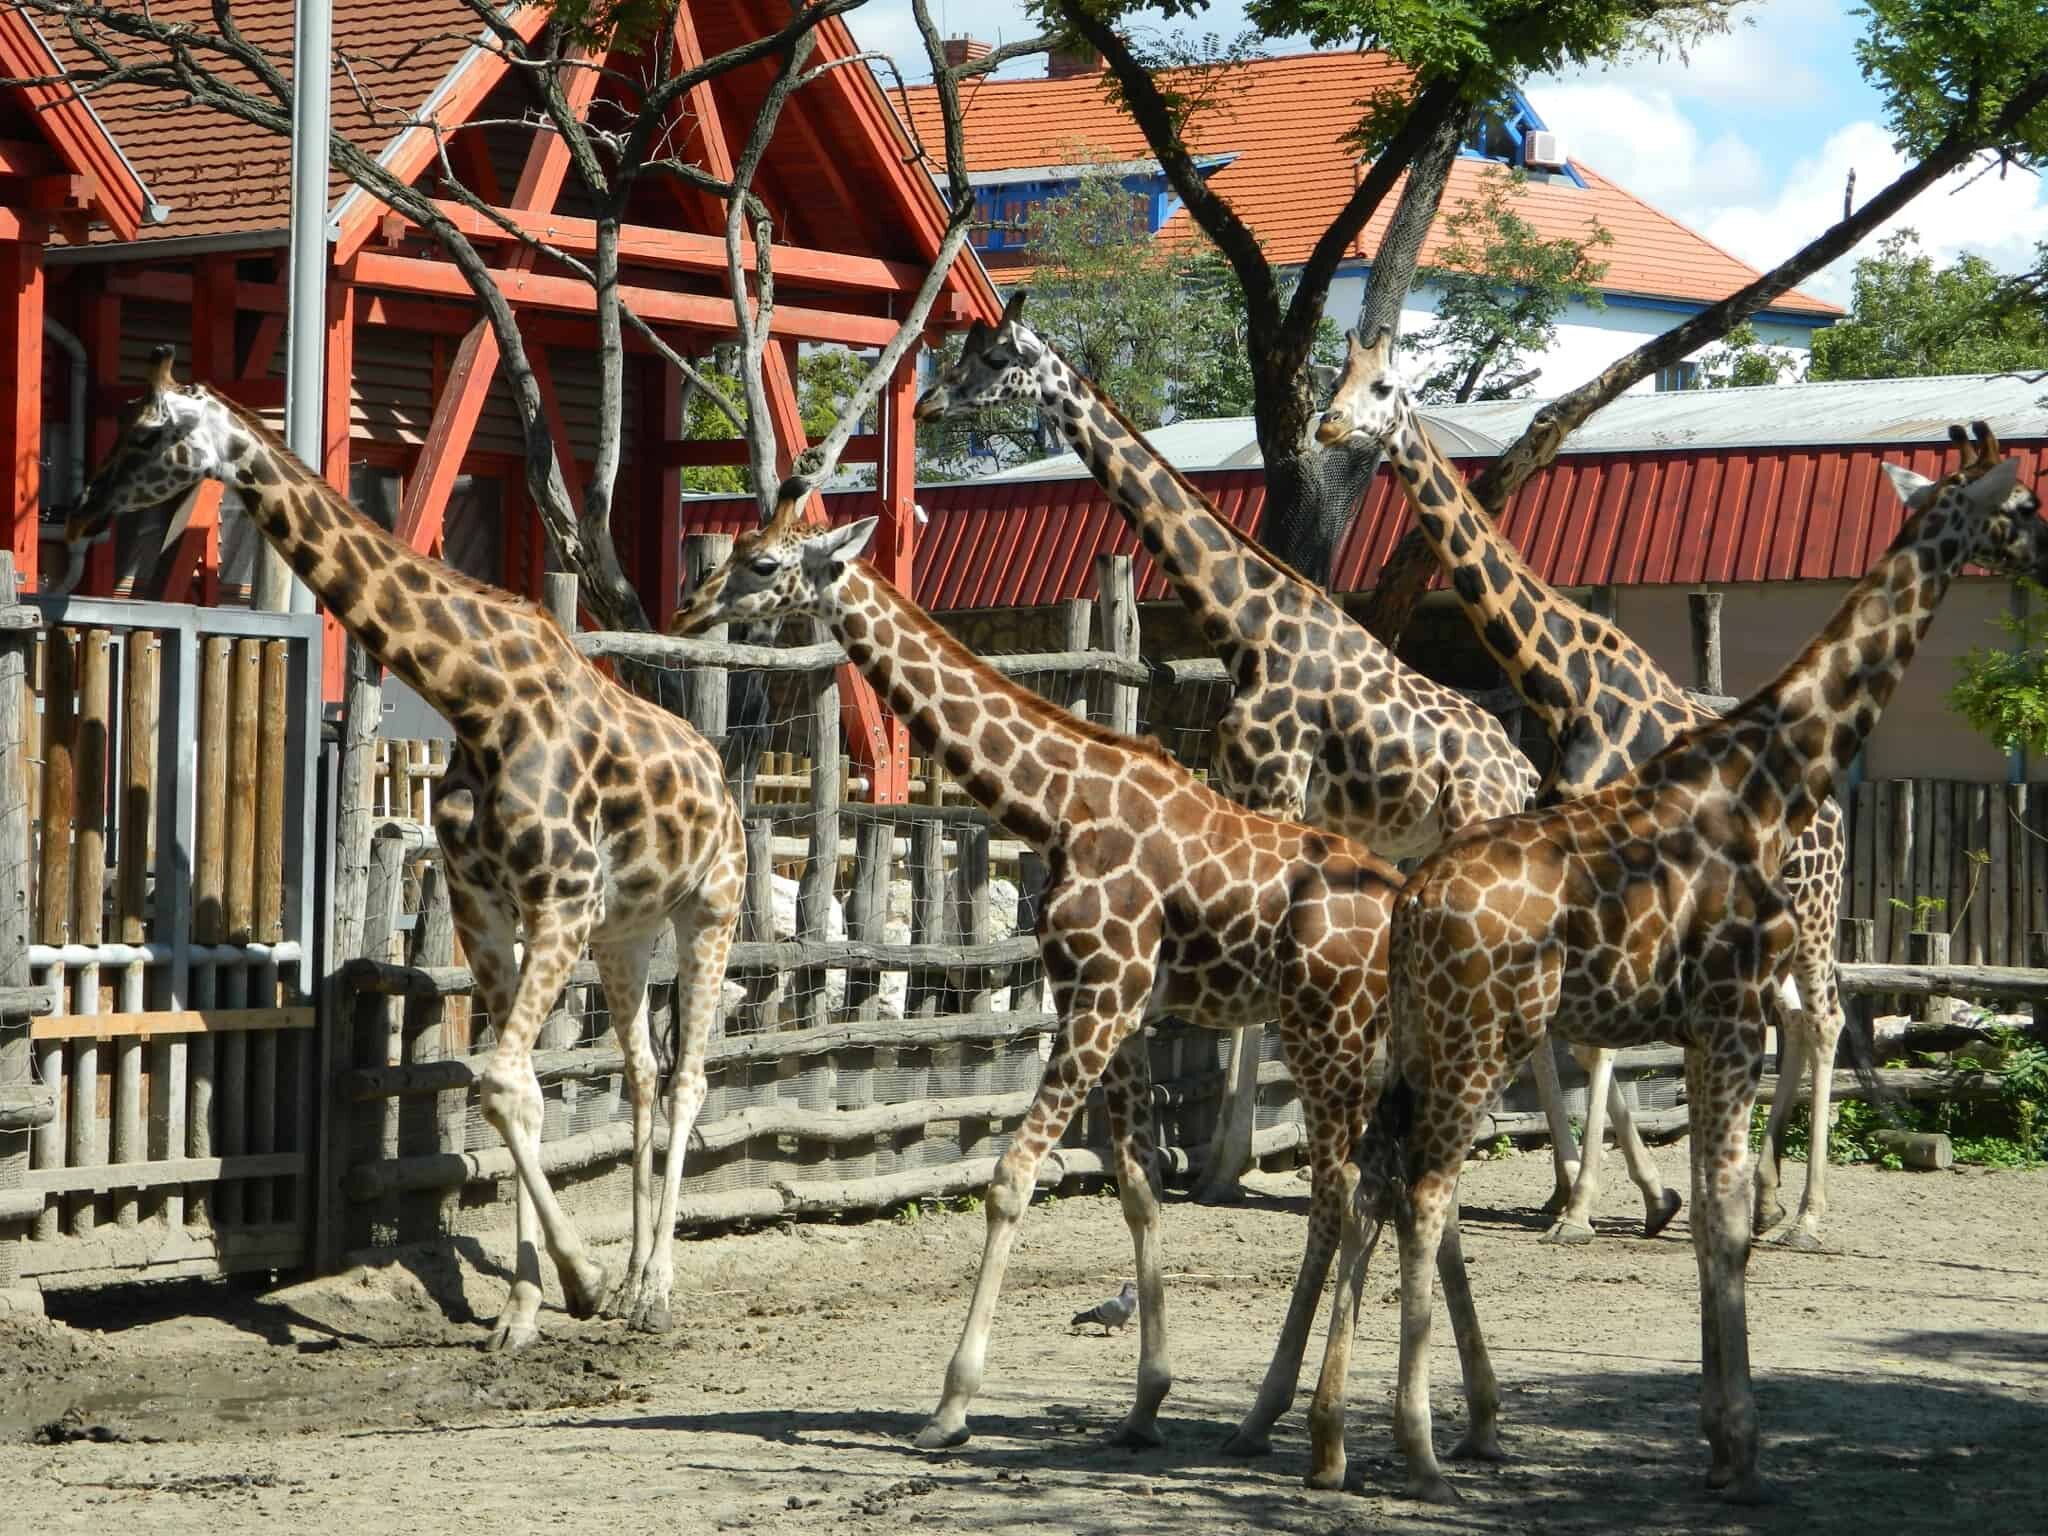 Gorgeous giraffes at Budapest Zoo 